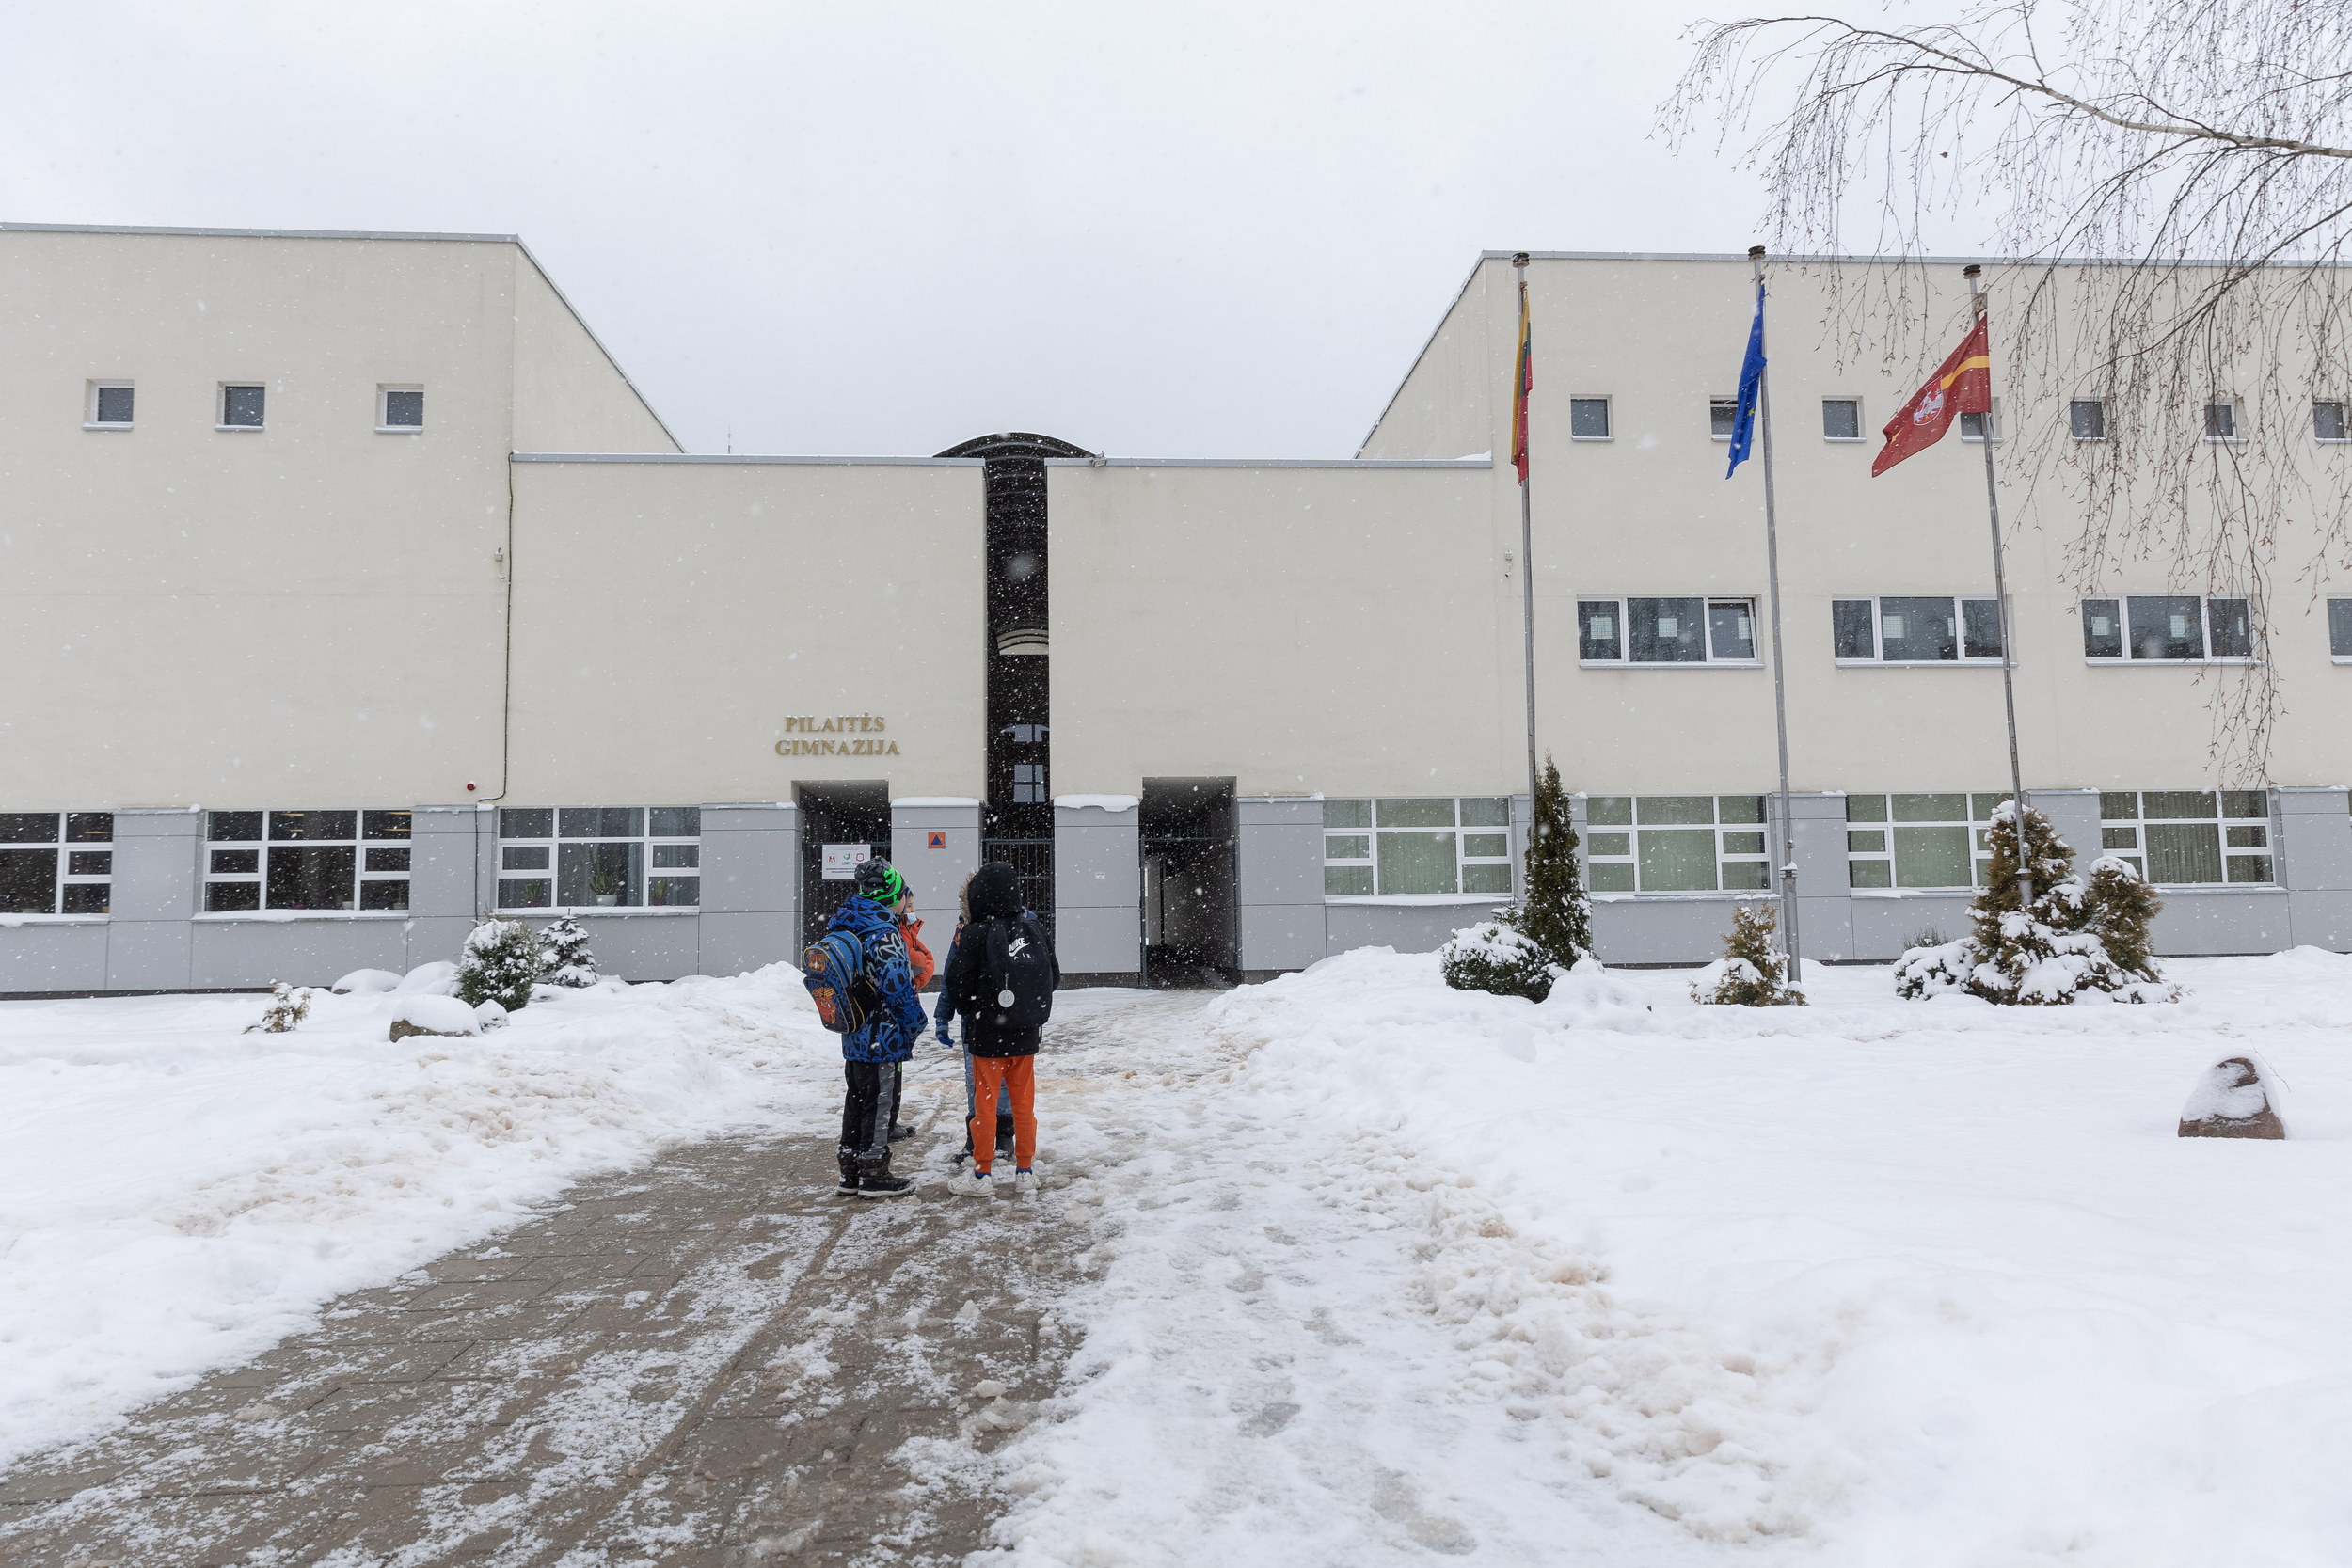 Vydūnas secondary school